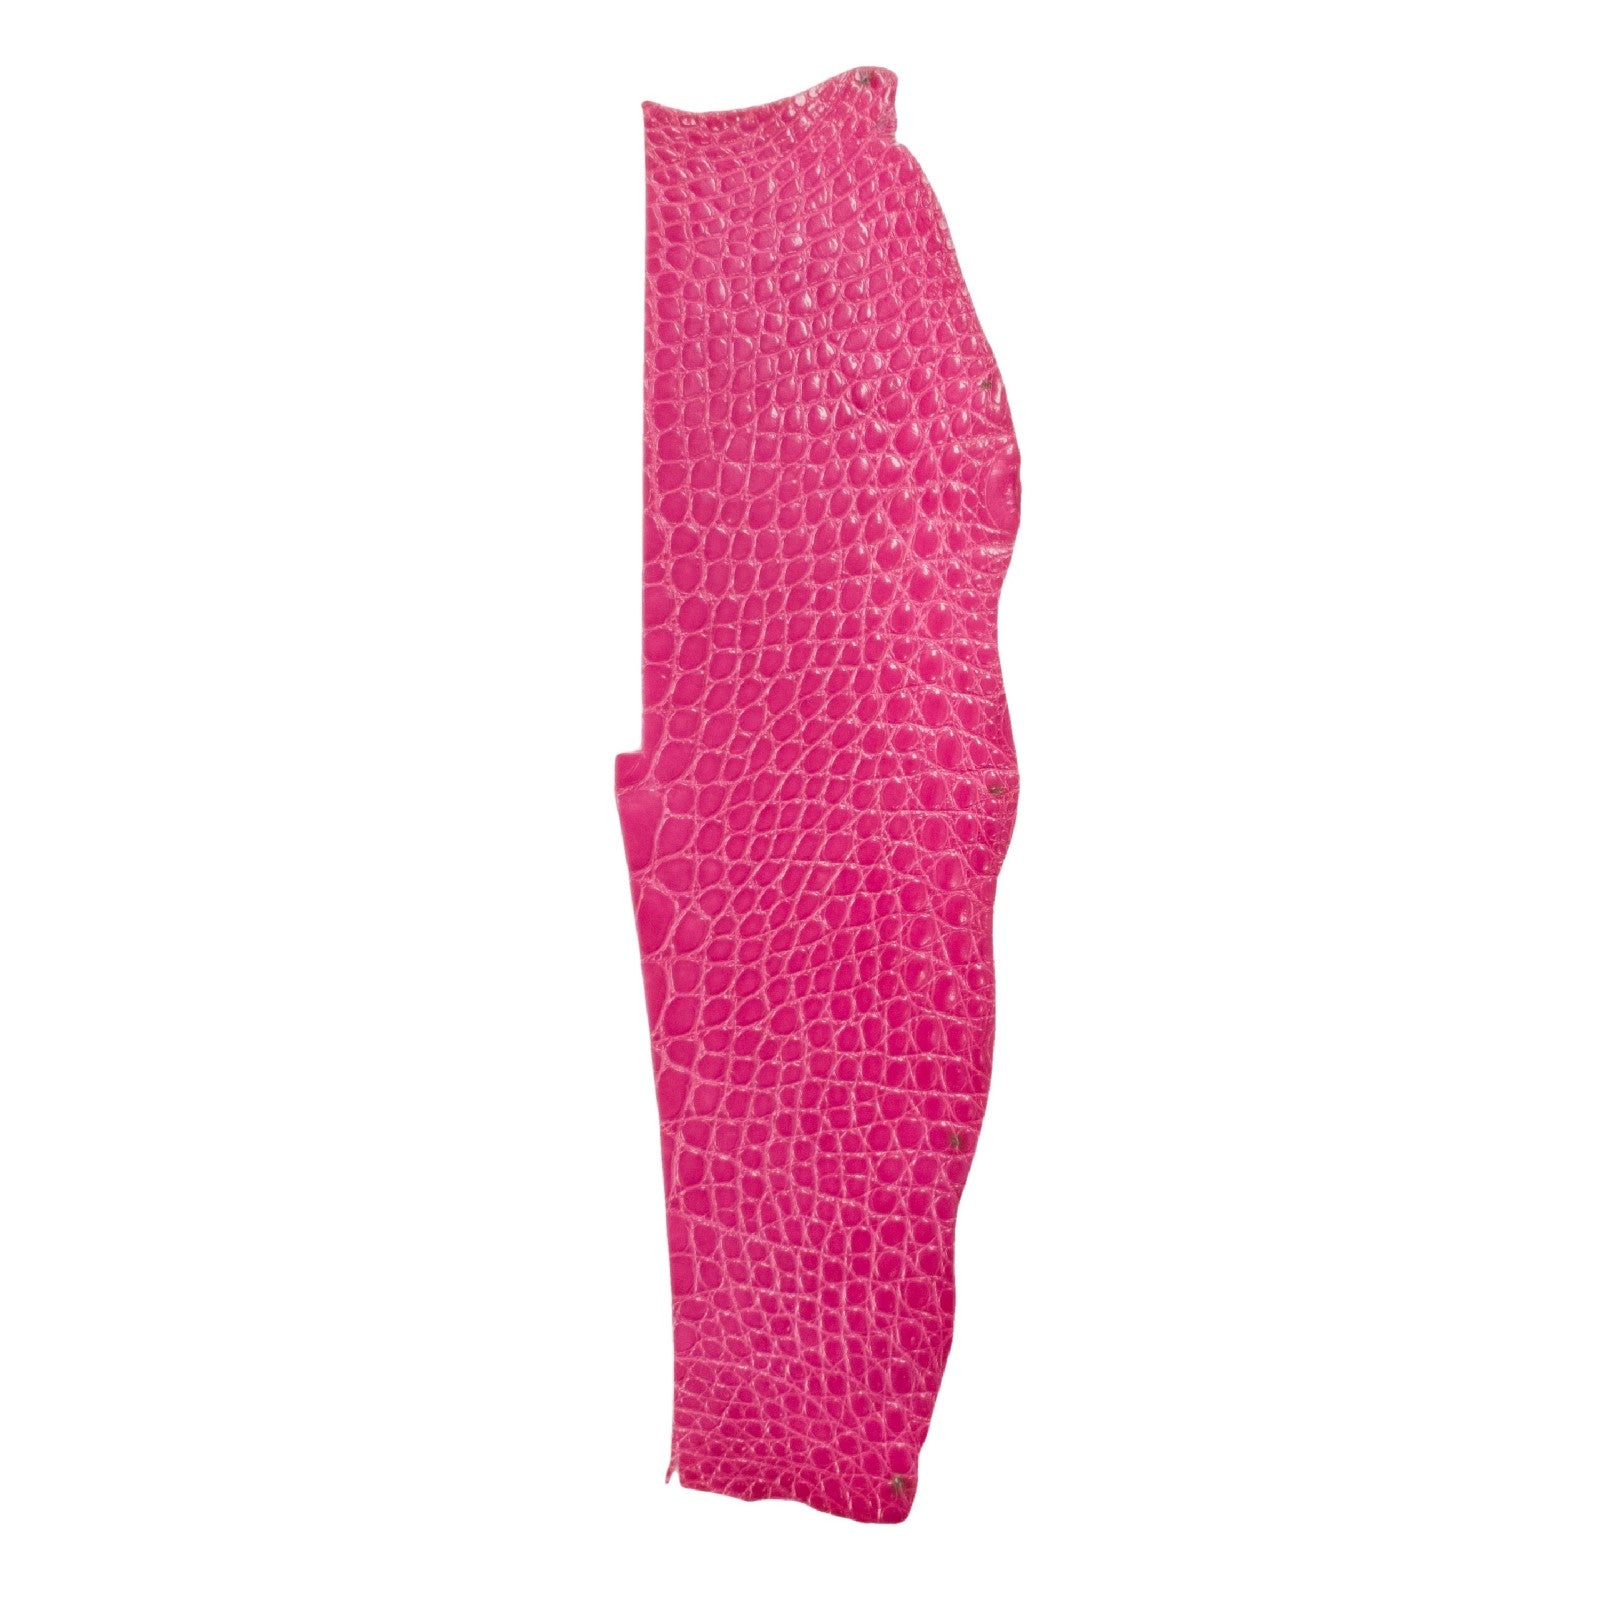 Alligator Crocodile Skin Leather Belly Glazed Hot Pink 35x115cm